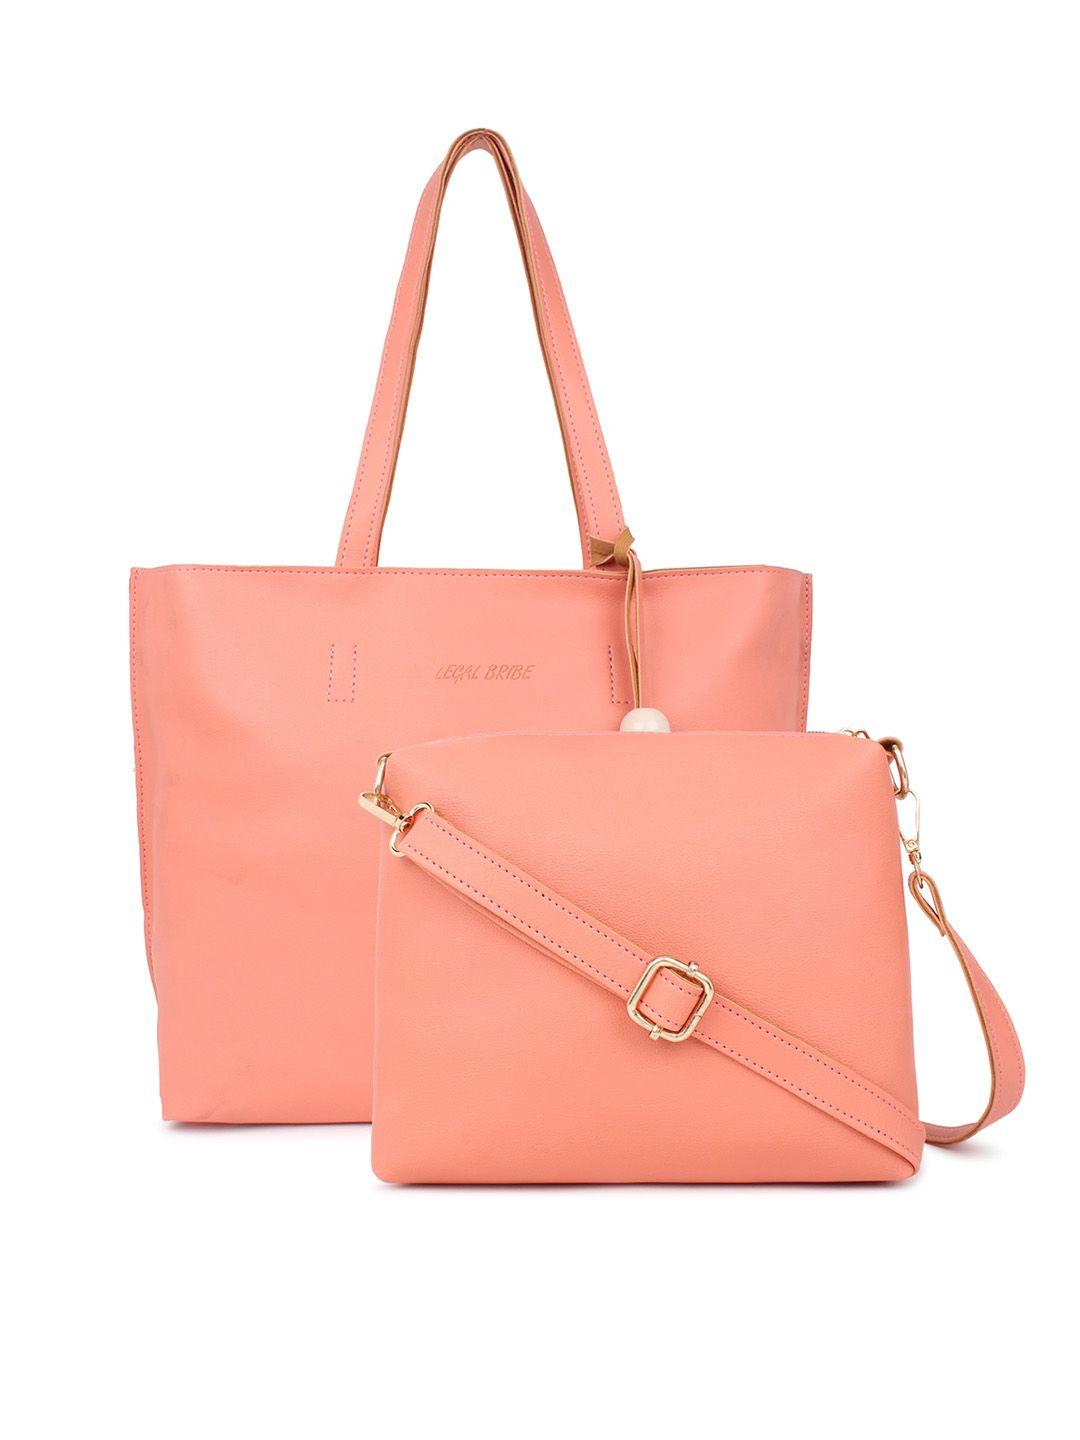 legal-bribe-pink-pu-oversized-structured-shoulder-bag-with-tasselled